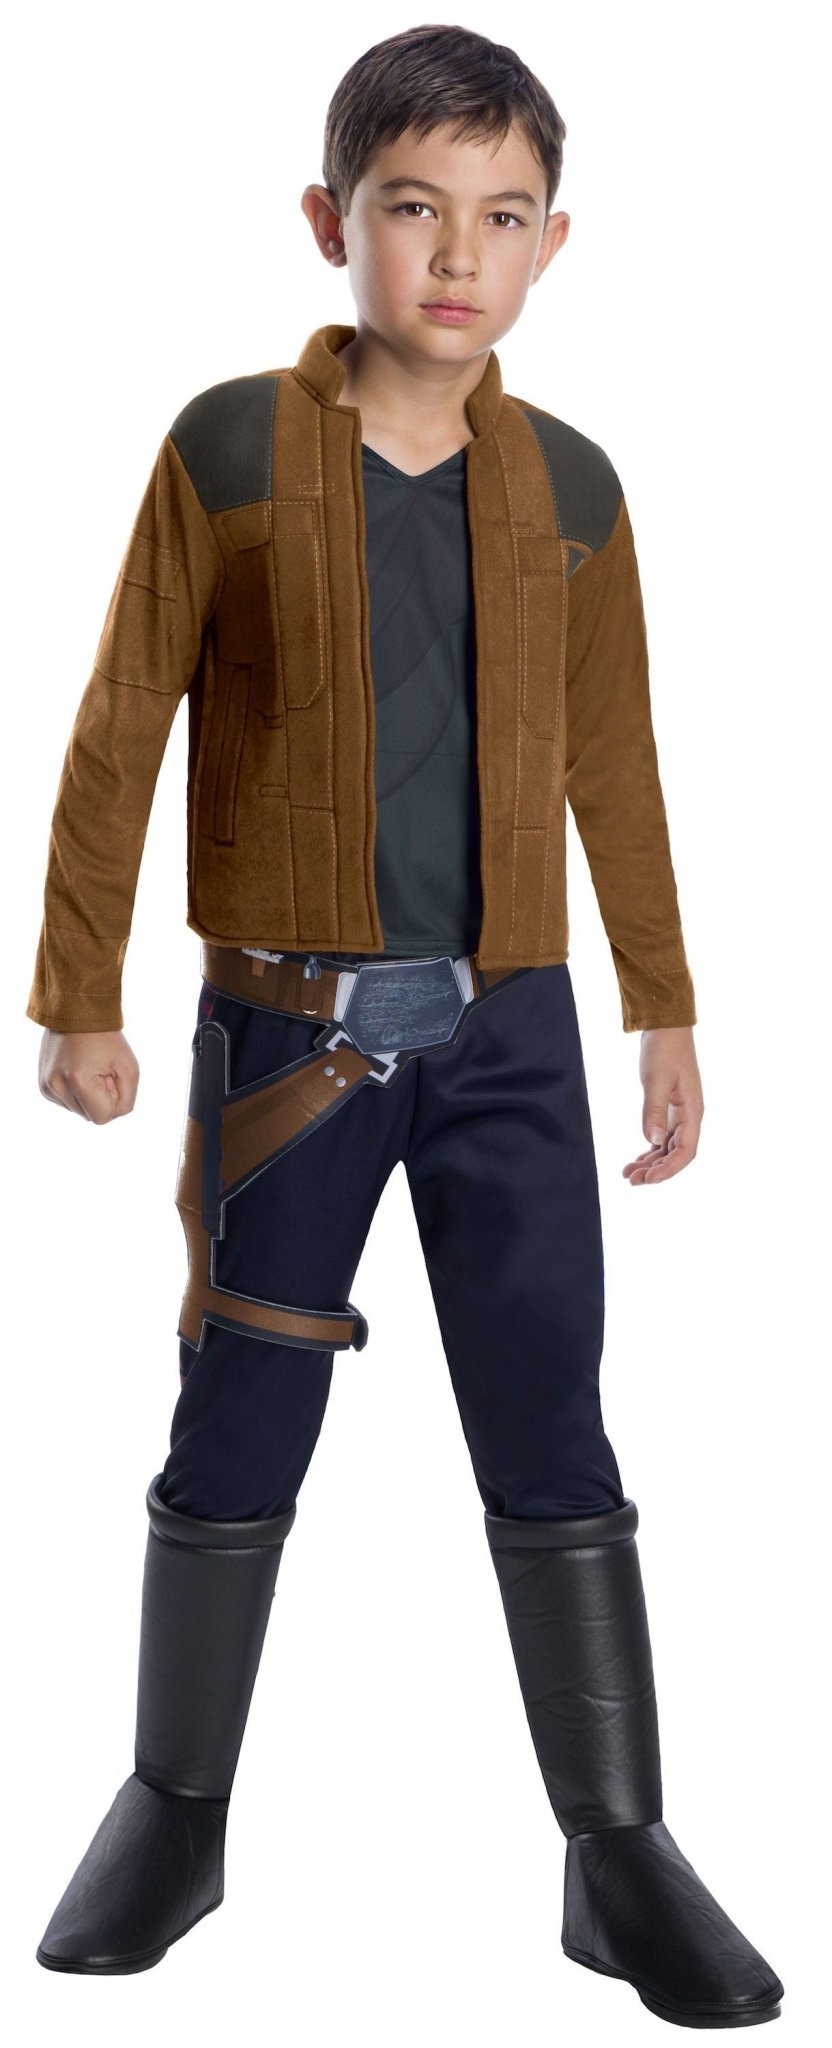 Boys Han Solo Costume RUB-641226 LARGE - JJ's Party House